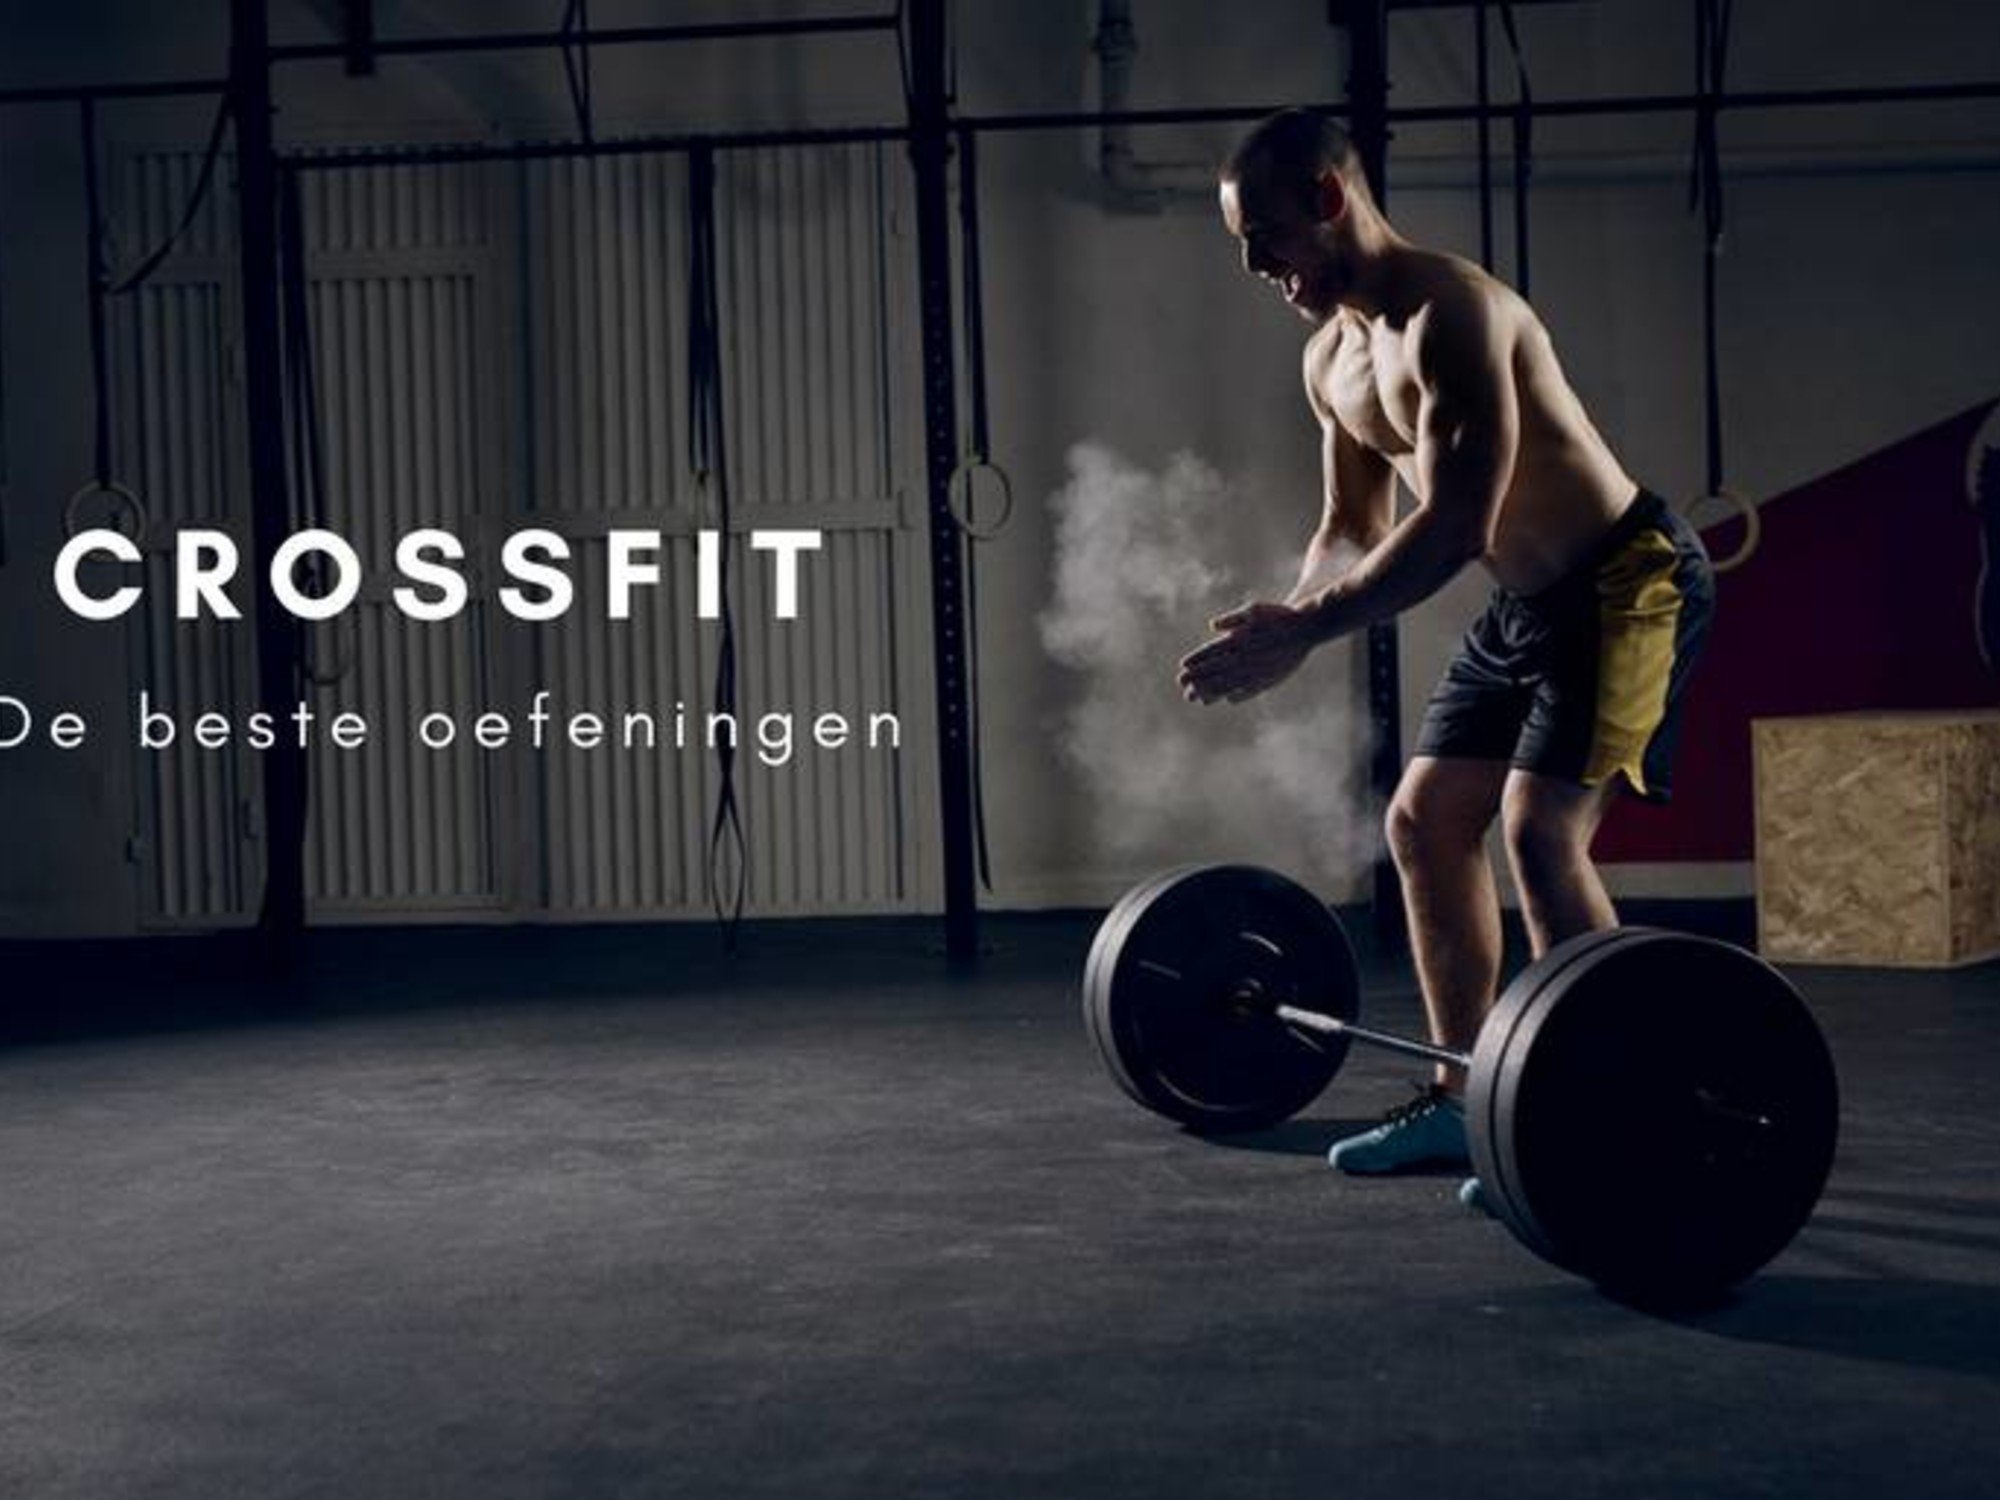 pak Groene bonen Vernederen Crossfit - de beste crossfit oefeningen - Fitnesskoerier.nl